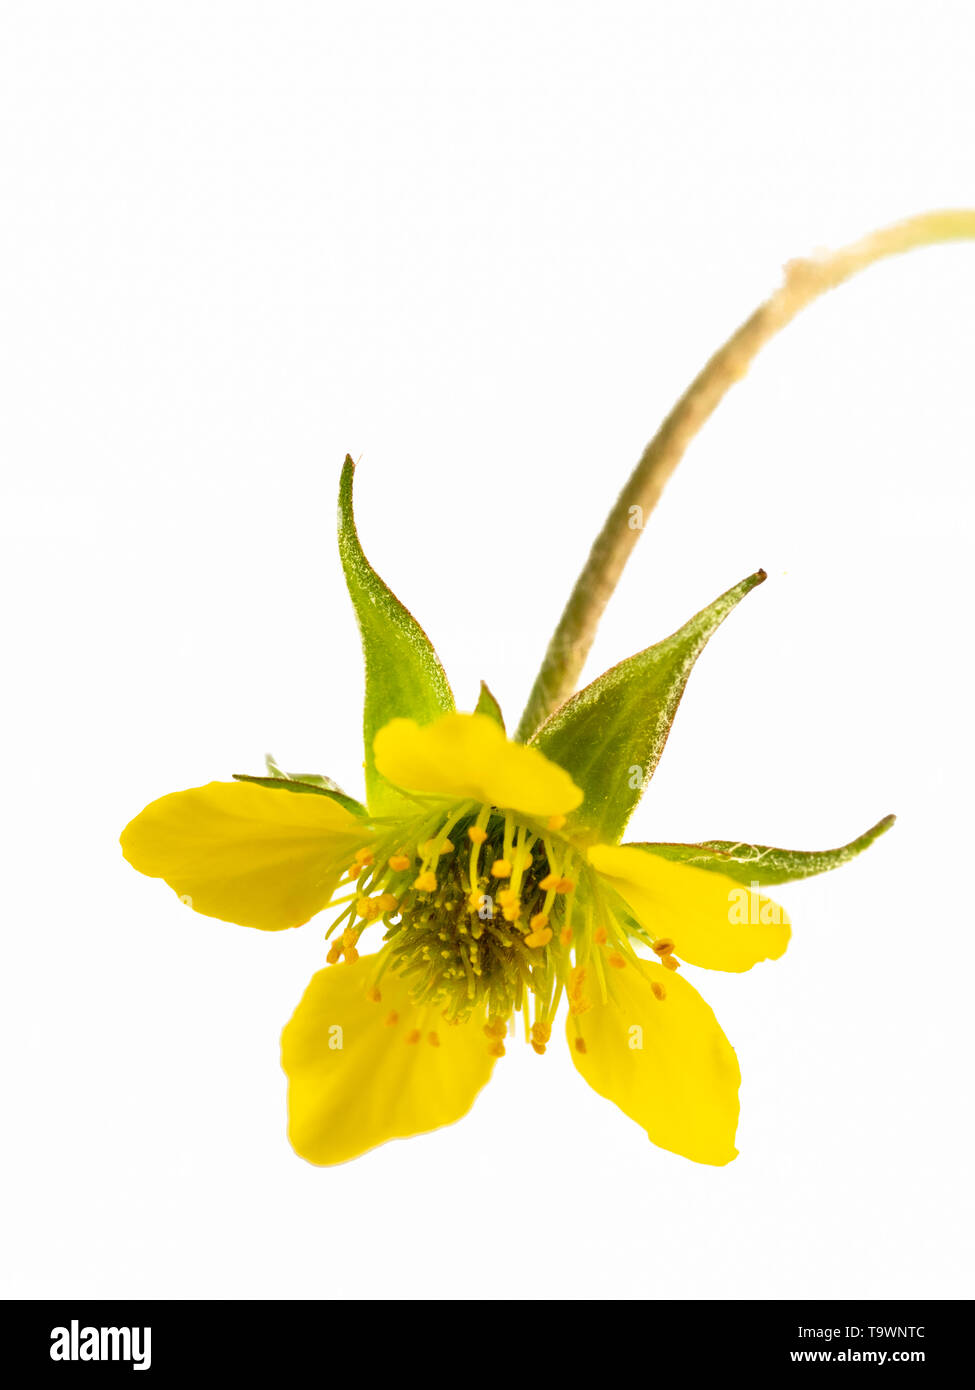 Cerrar imagen de una sola flor de la madera avens, Geum urbanum, sobre un fondo blanco. Foto de stock